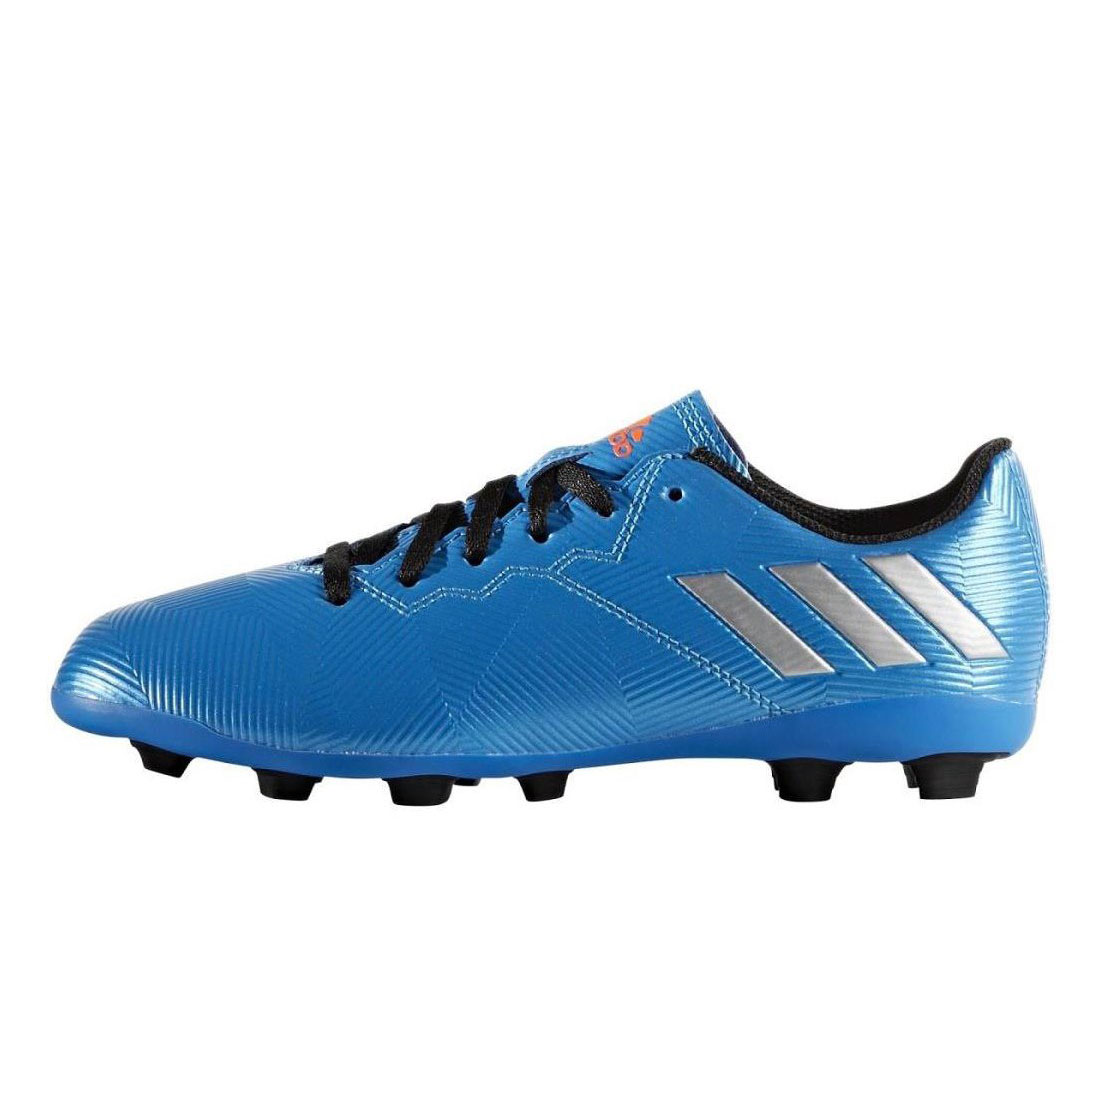 adidas Messi 16.4 FXG J blue  S79648